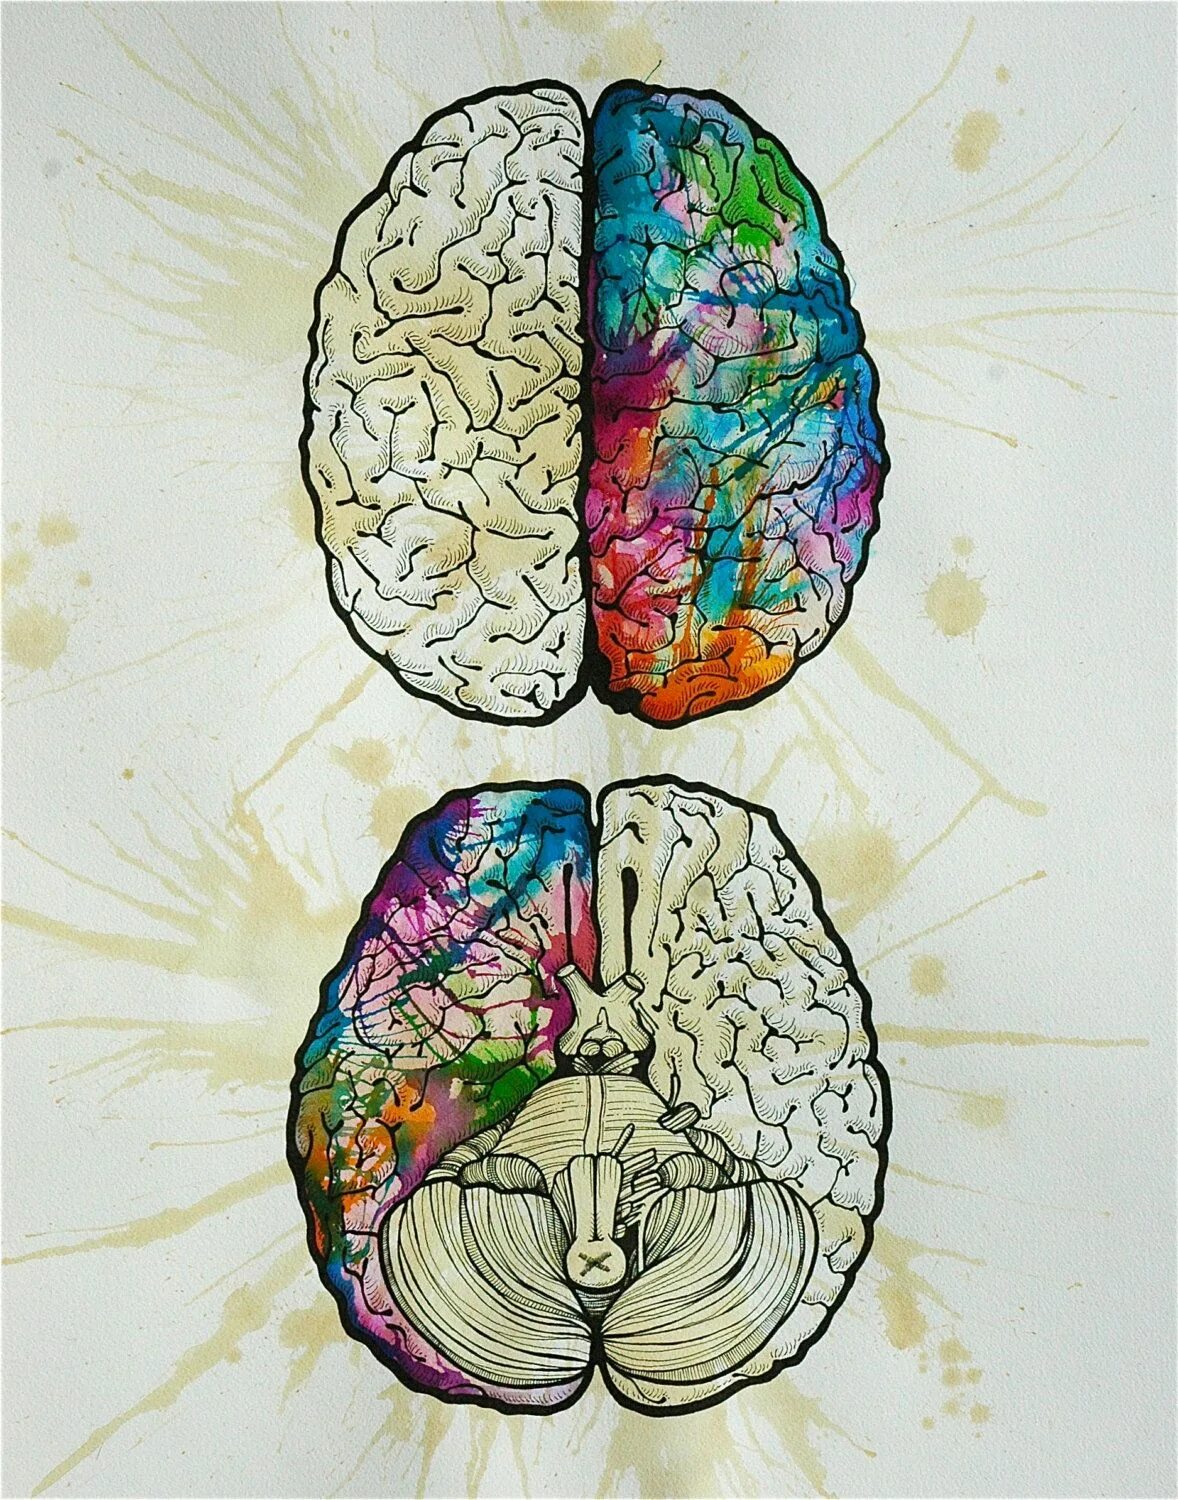 Картинка полушарие мозга. Полушария мозга. Мозг рисунок. Асимметрия полушарий головного мозга. Функциональная асимметрия полушарий мозга.